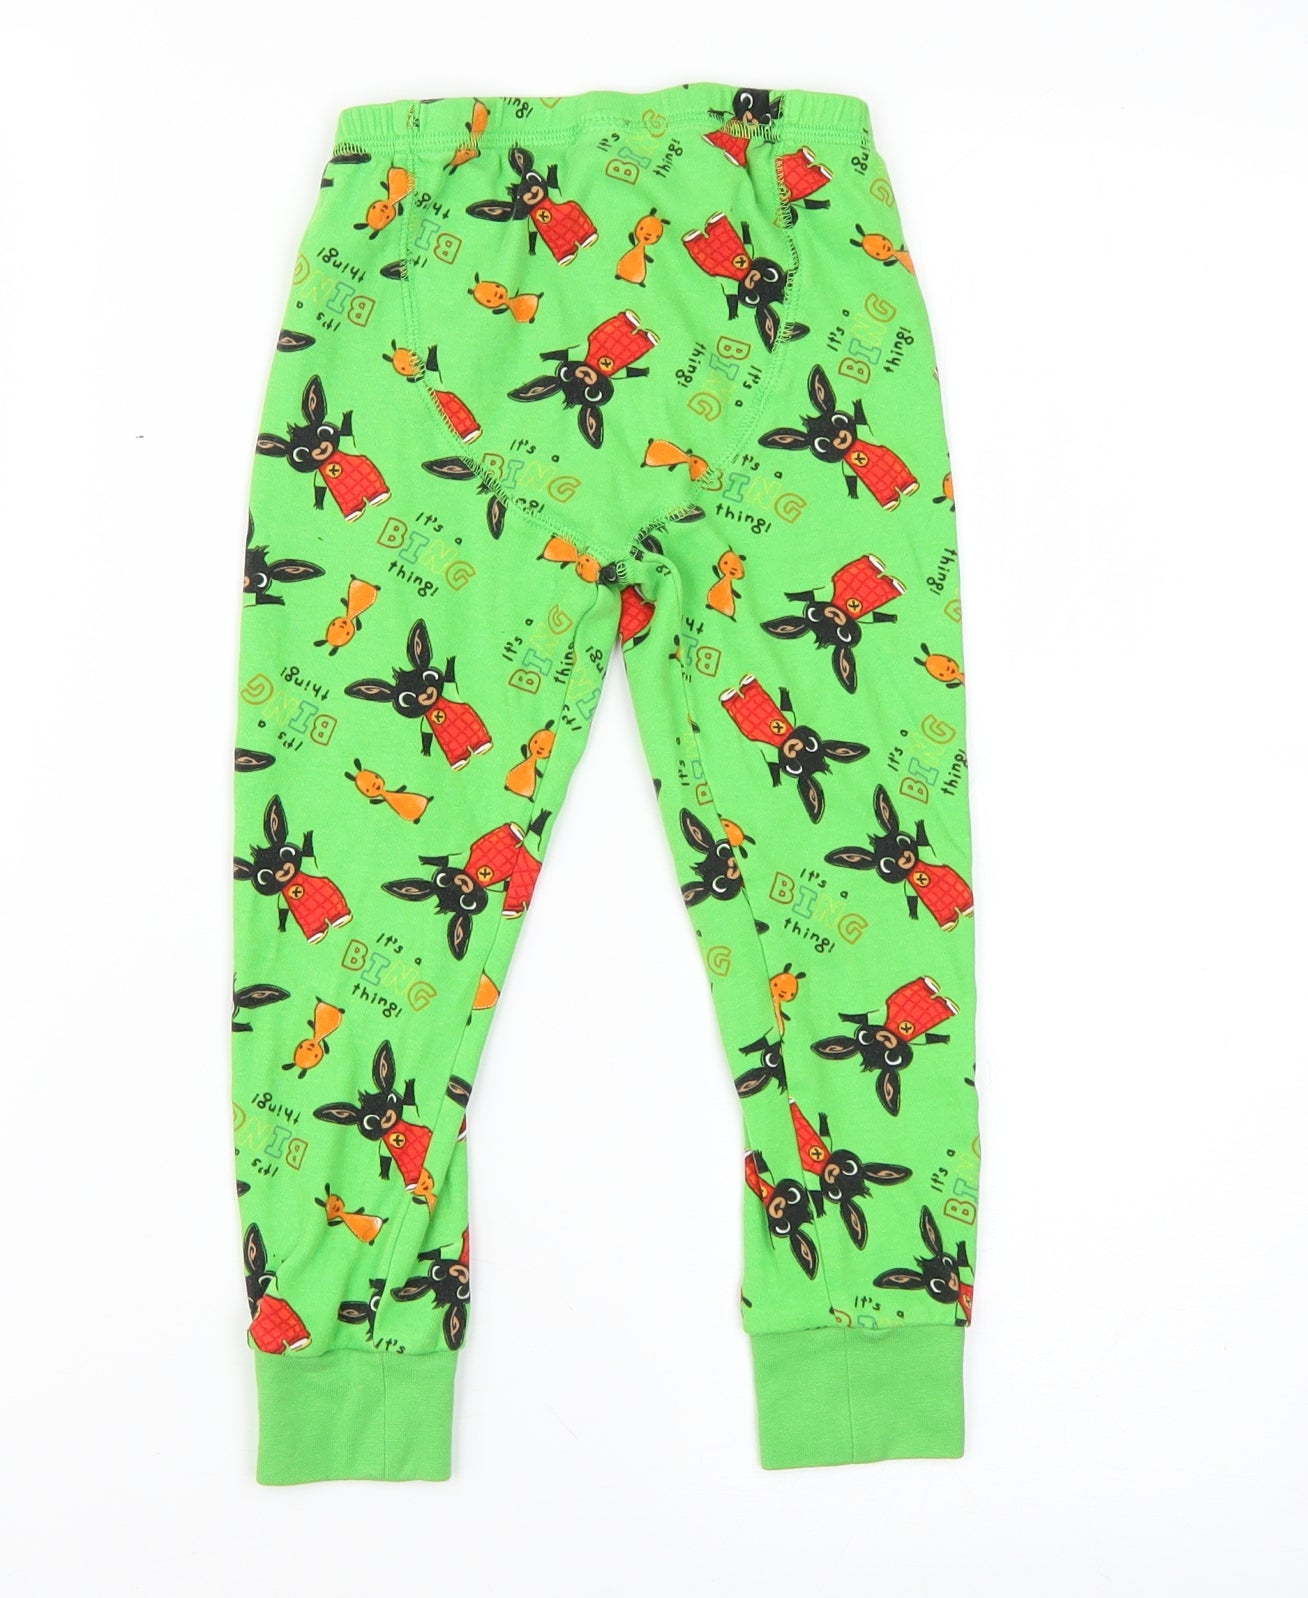 George Boys Green Solid   Pyjama Pants Size 4-5 Years  - bing